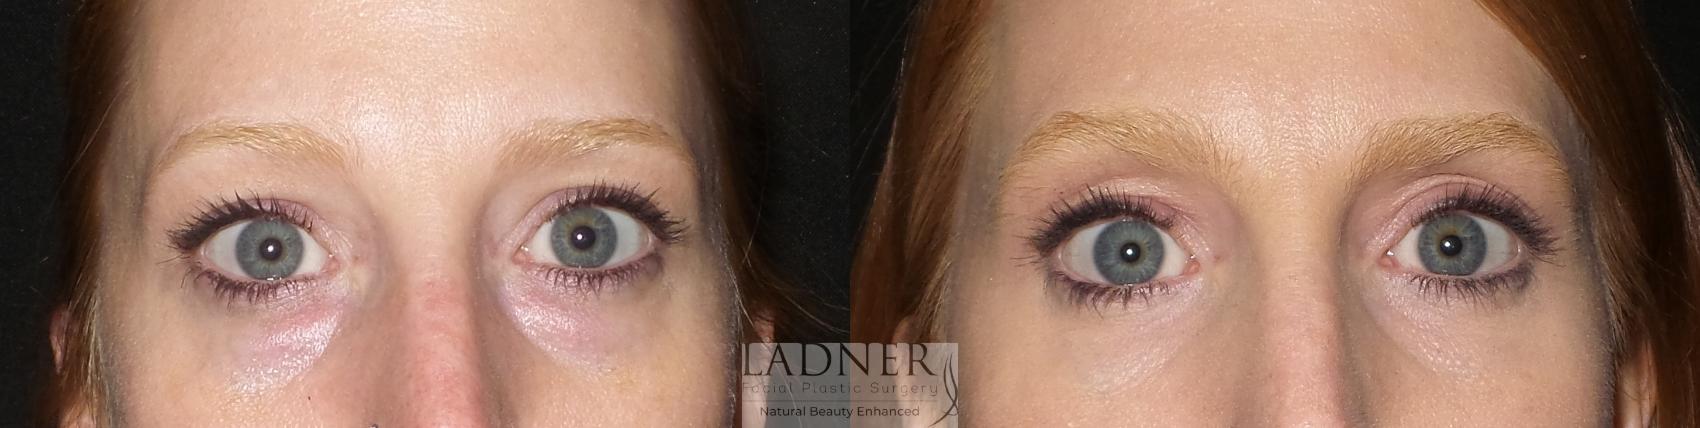 Eyelid Surgery (blepharoplasty) Case 175 Before & After Front | Denver, CO | Ladner Facial Plastic Surgery